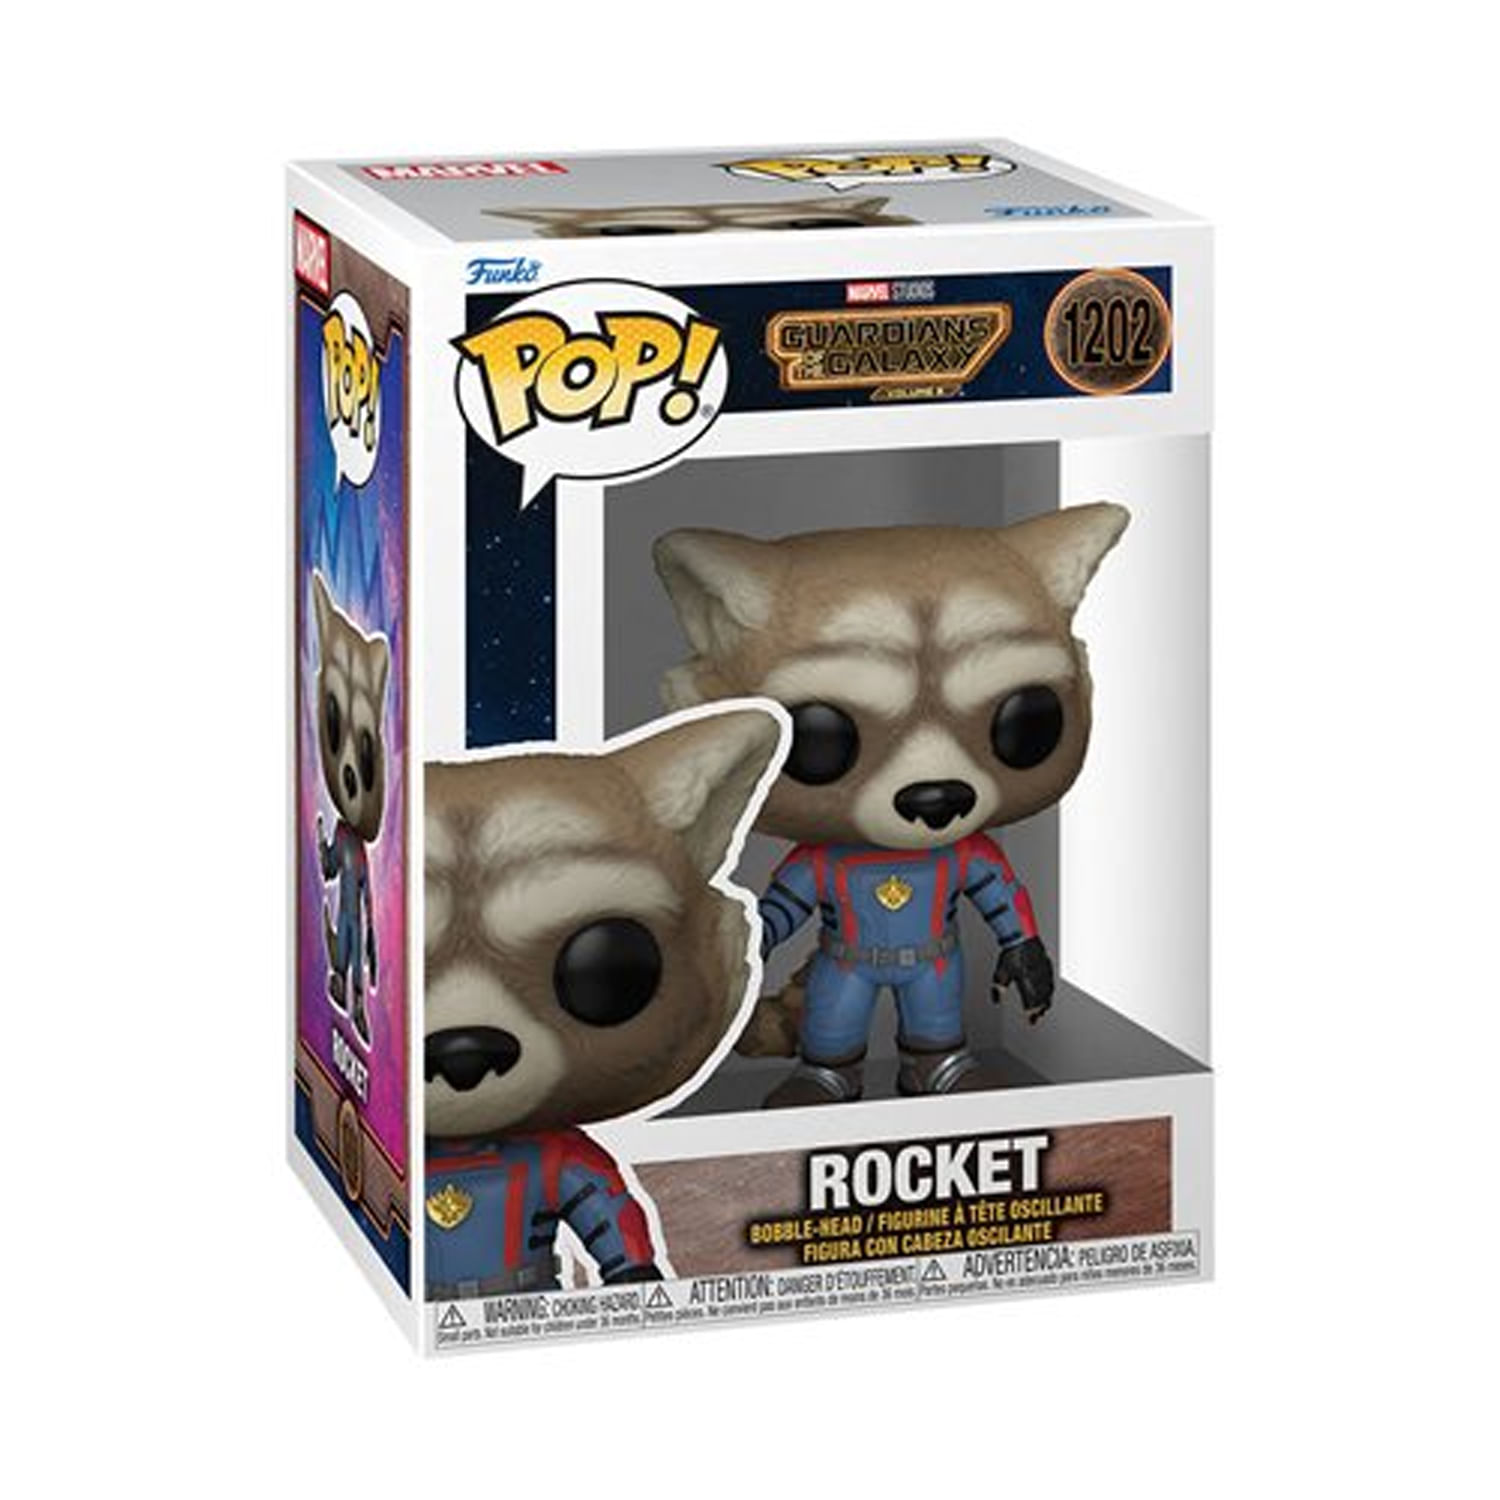 Guardians of the Galaxy Volume 3 Rocket Funko Pop 1202